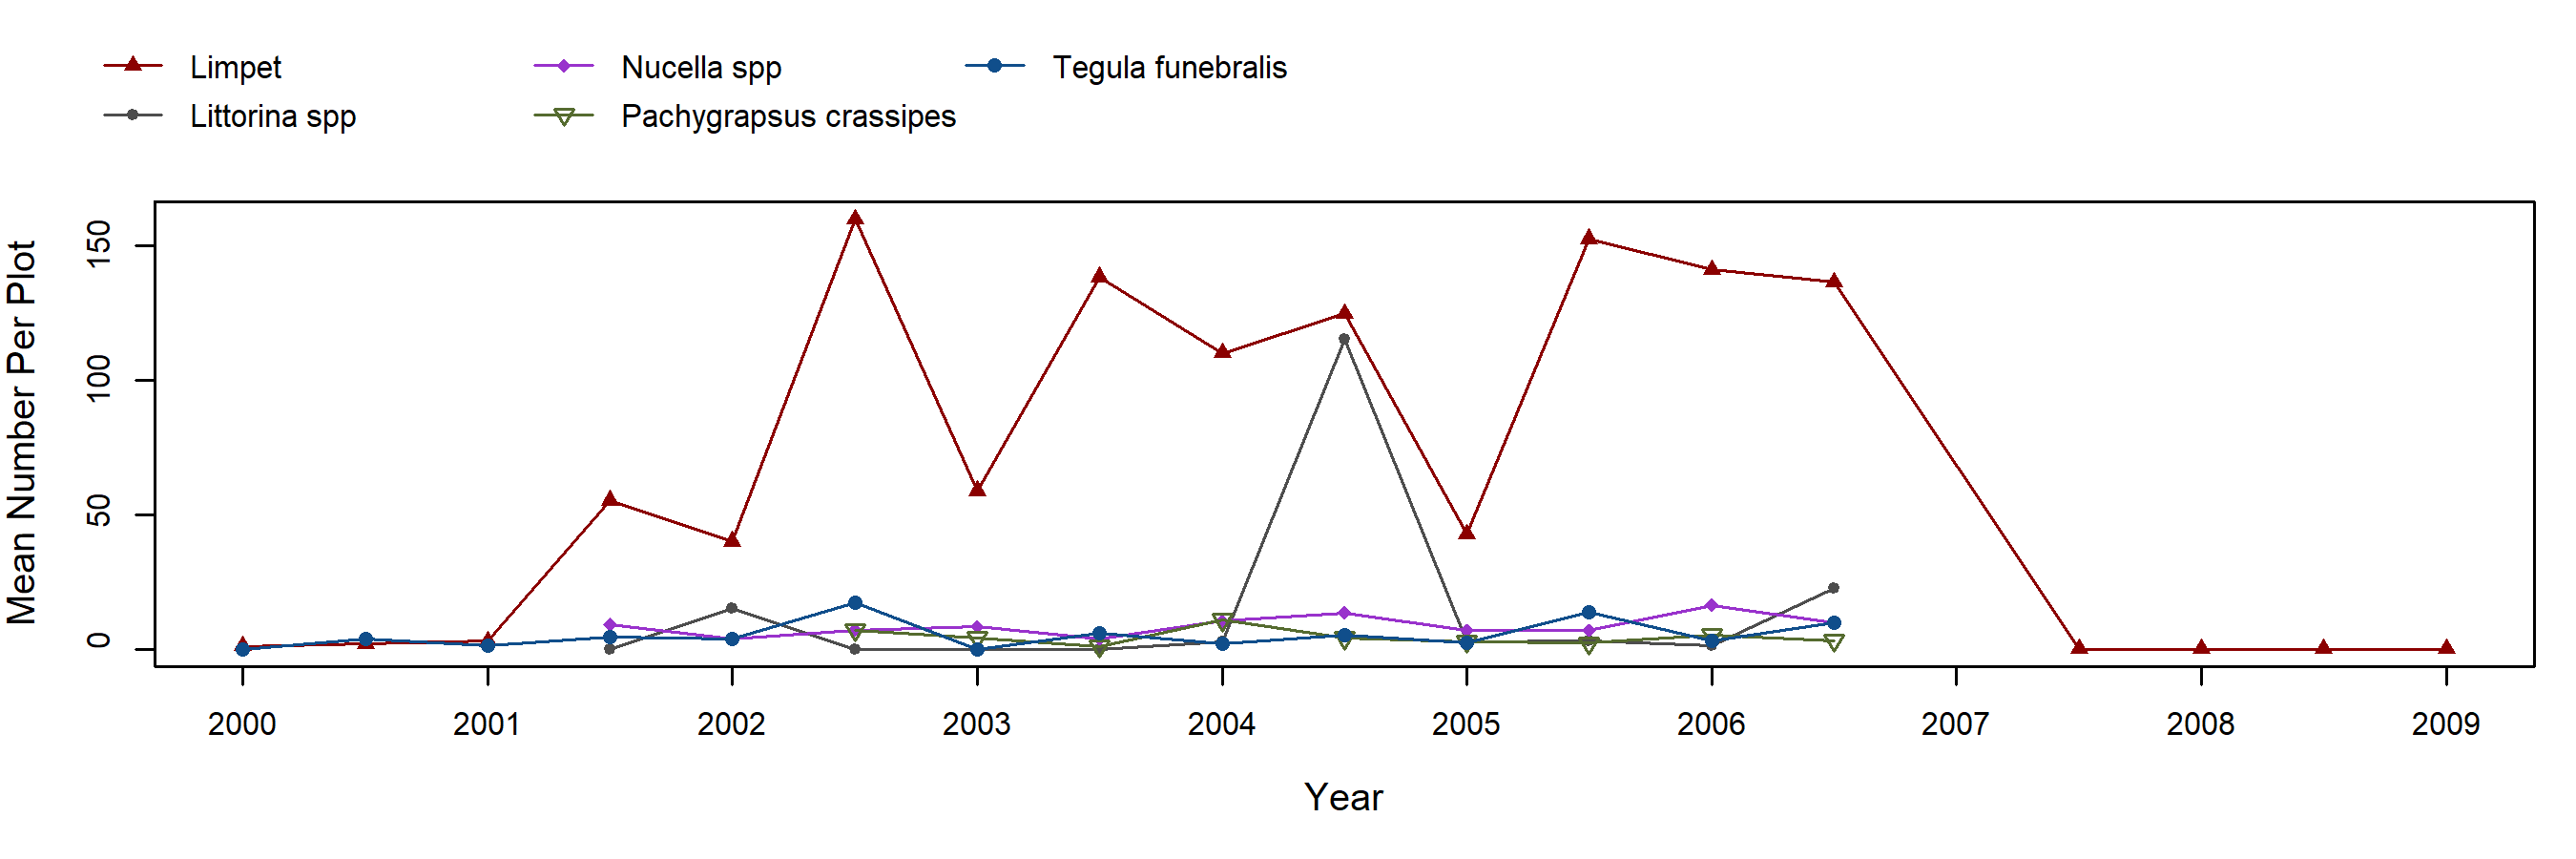 Government Point Mytilus trend plot